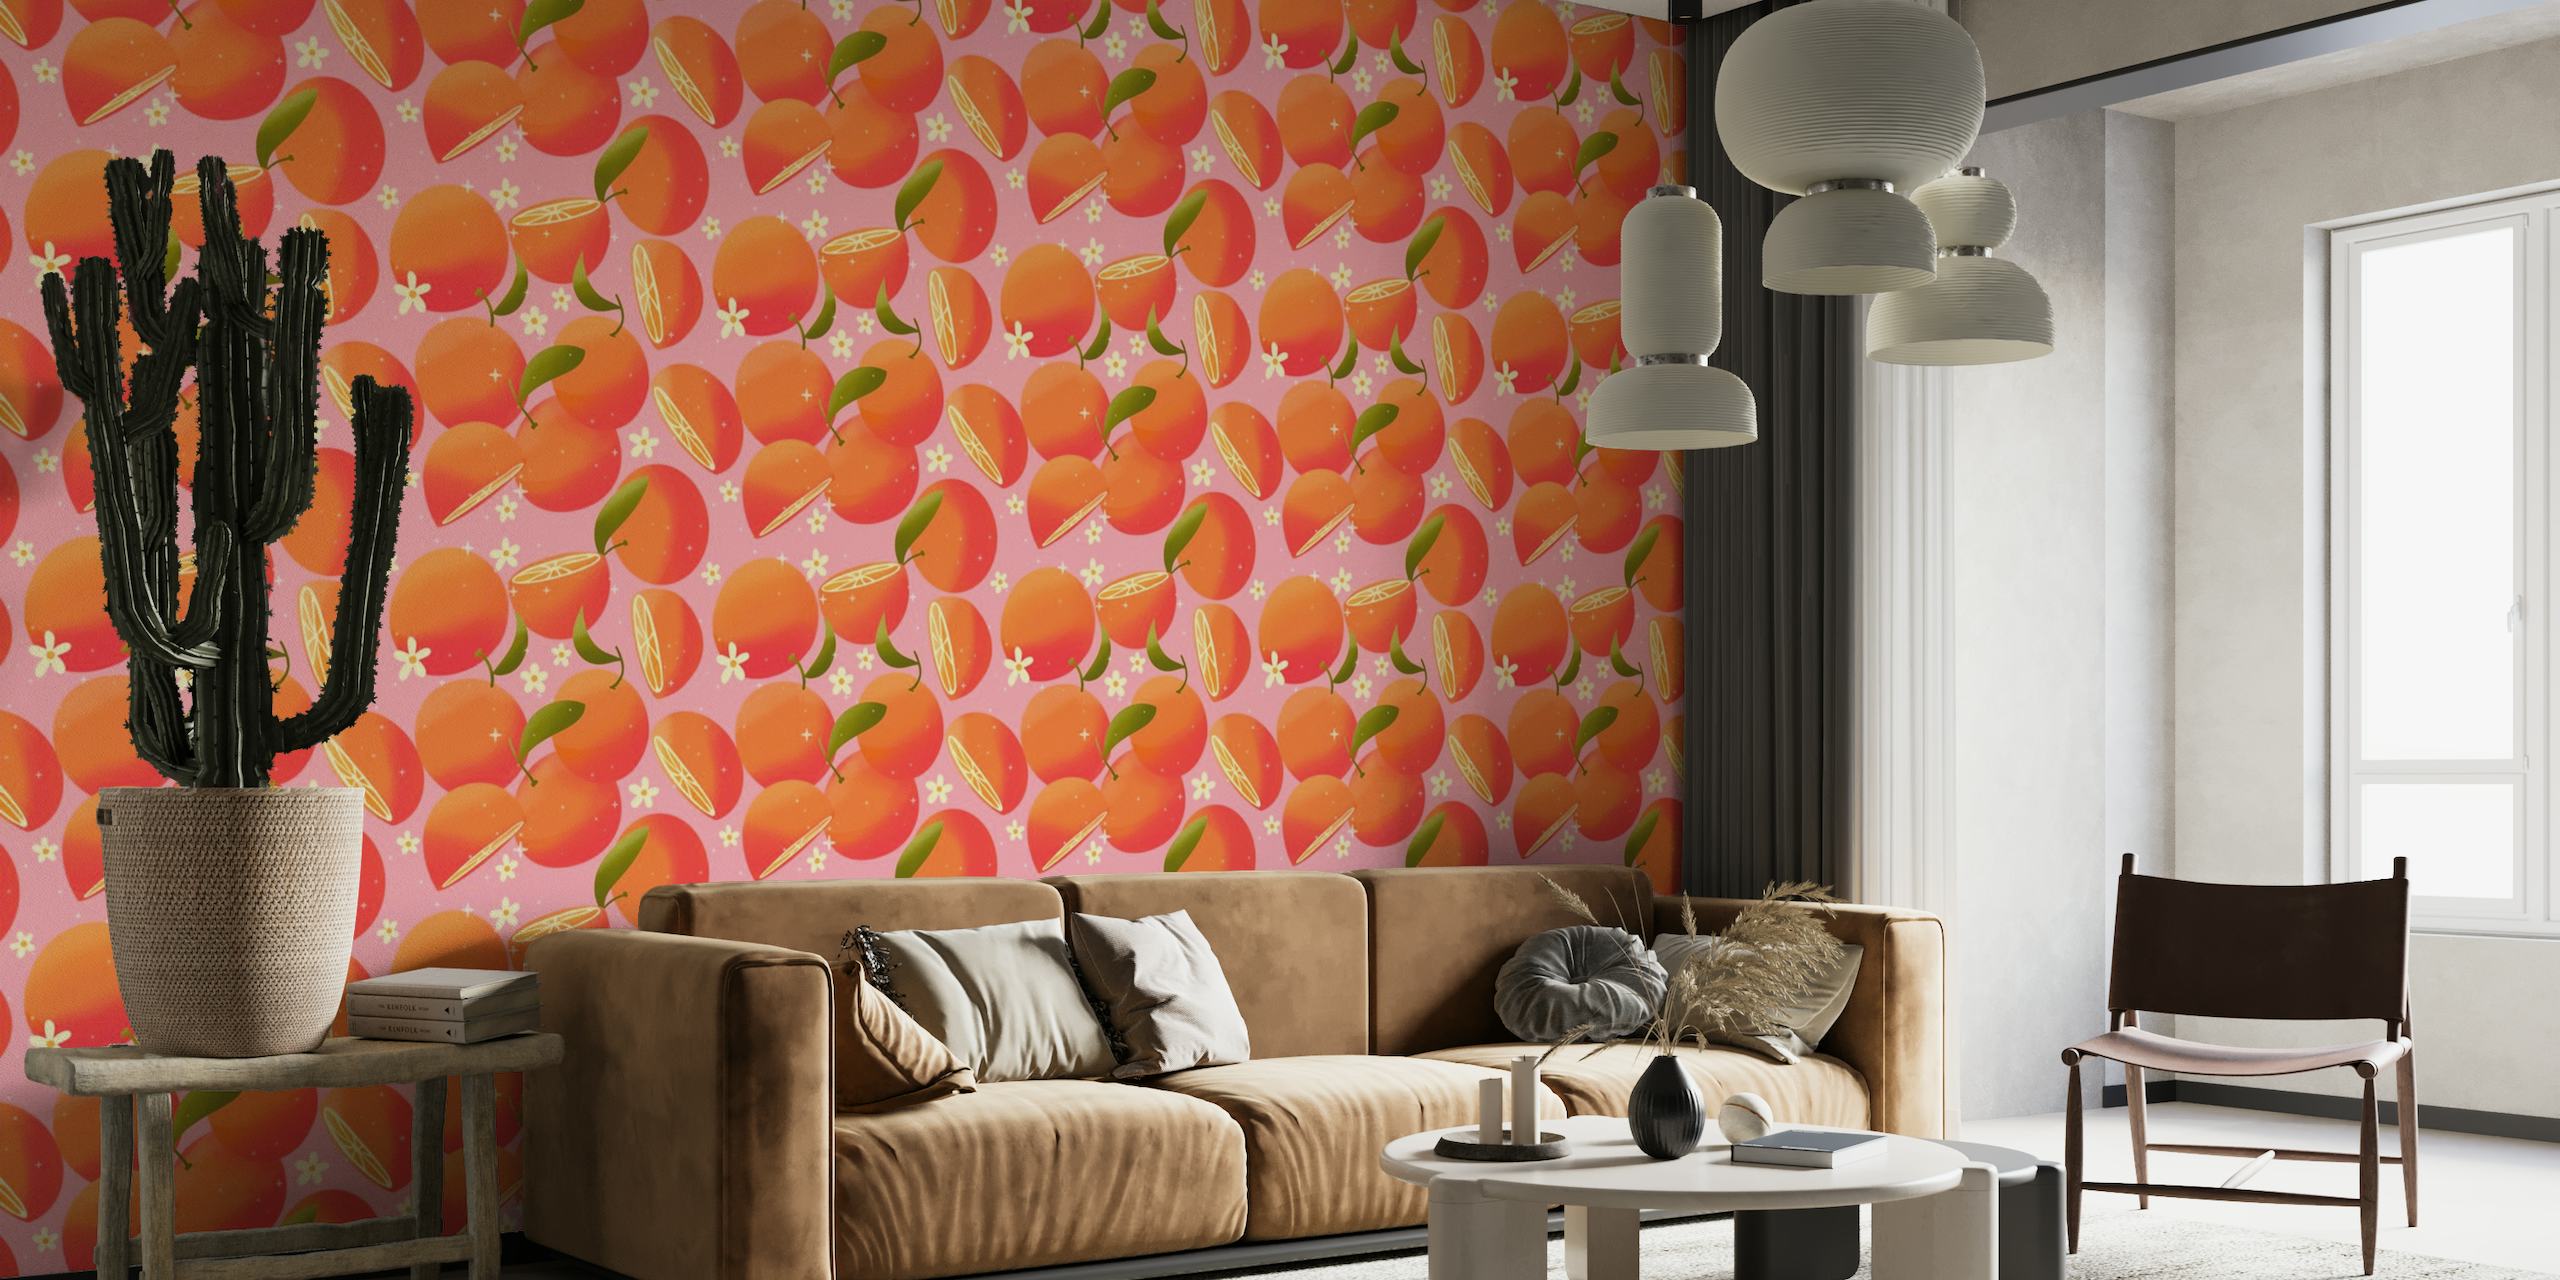 Juicy oranges on pink background with flowers papiers peint